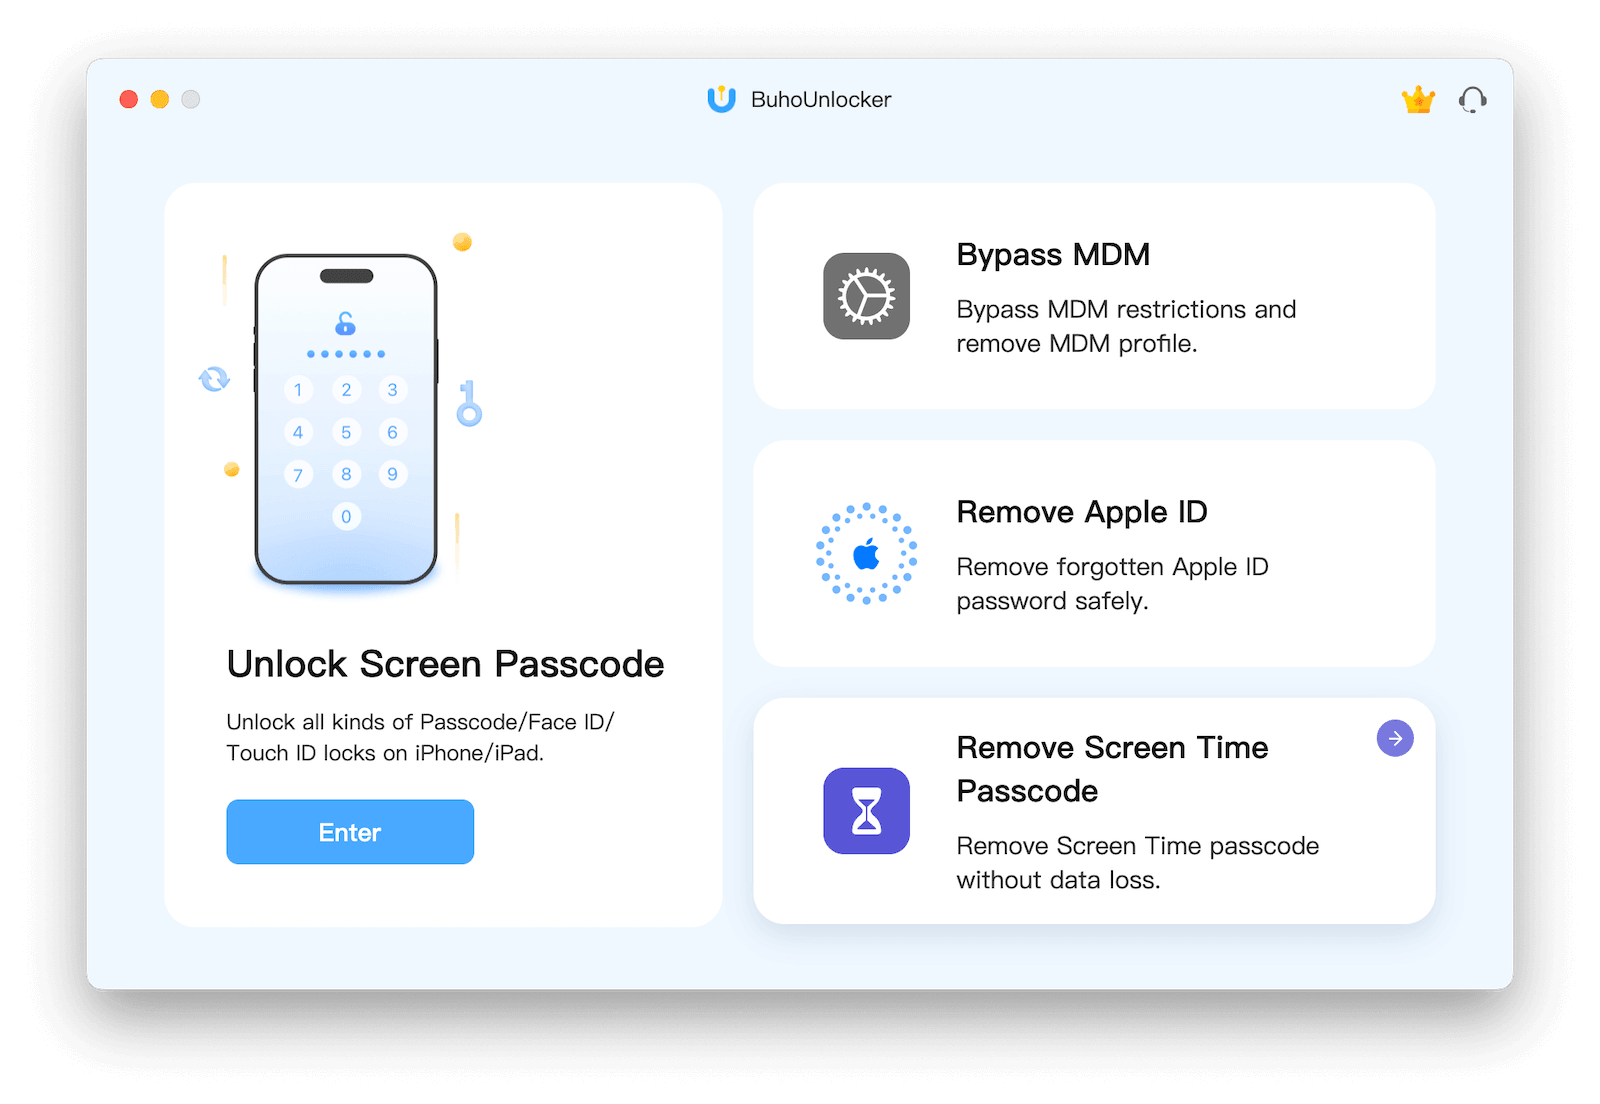 BuhoUnlocker Remove Screen Time Passcode